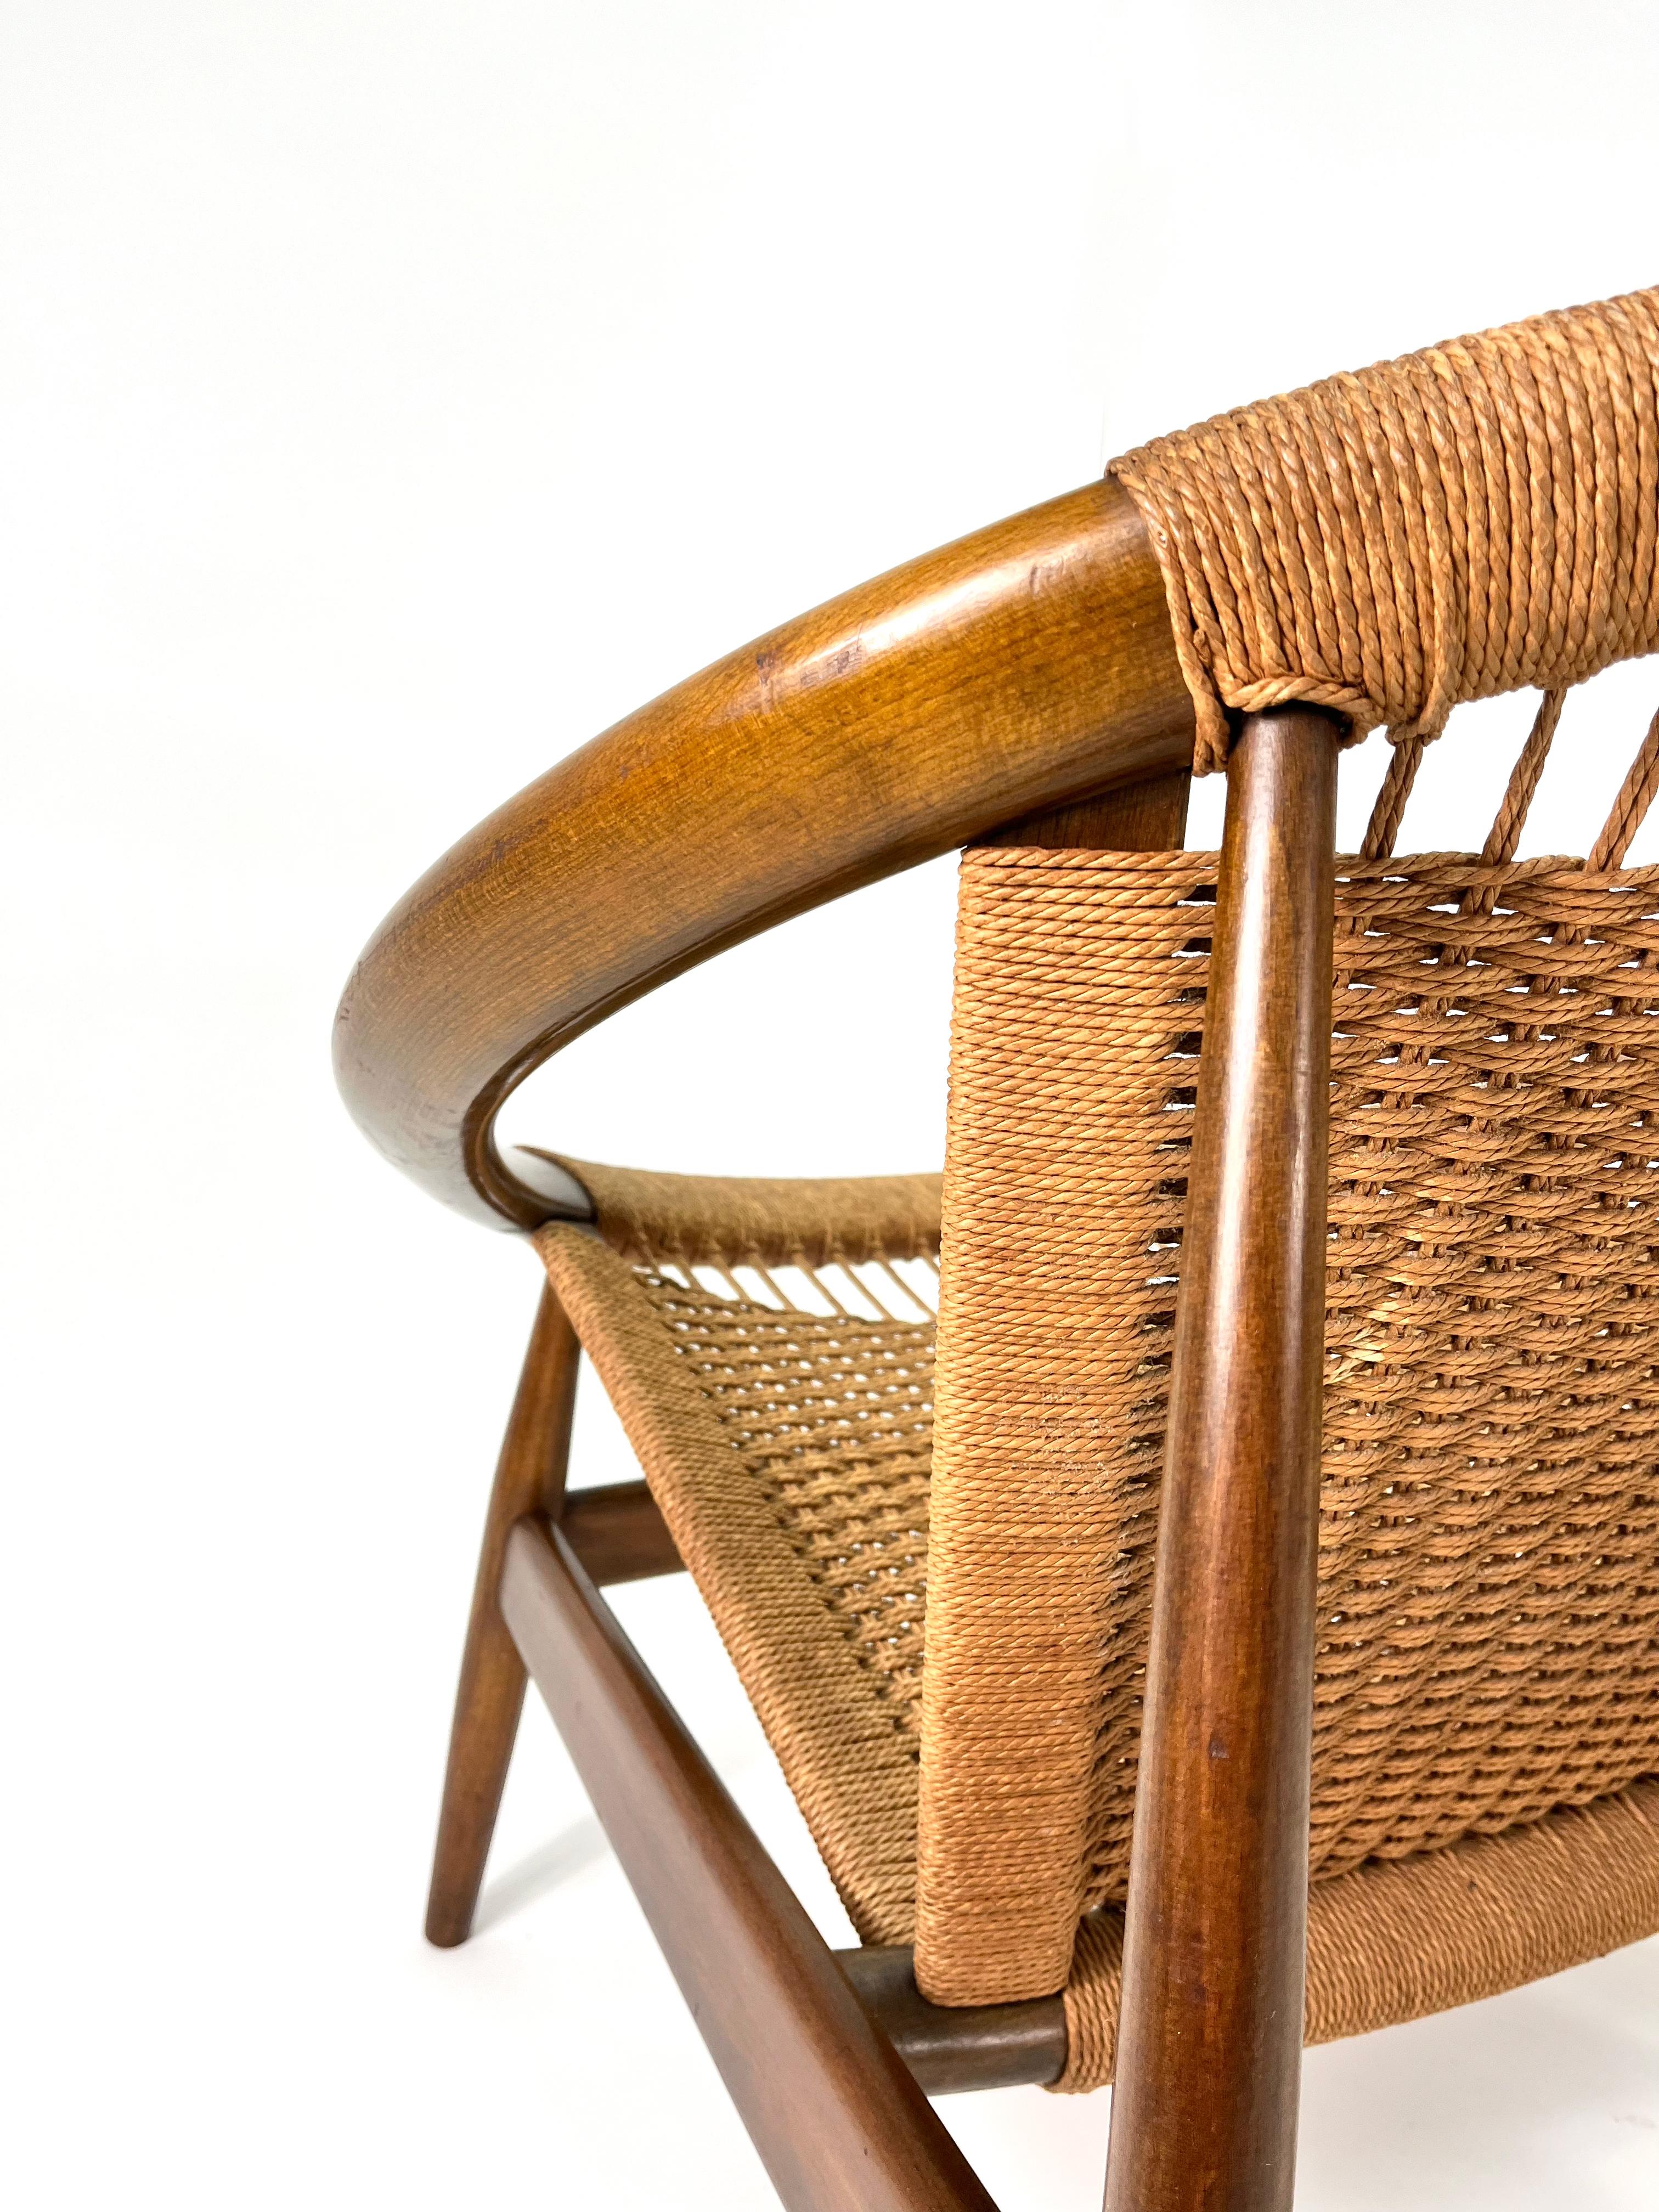 Tissé à la main Mid-Century Modern Ringstol Lounge Chair by Illum Wikkelsø en vente